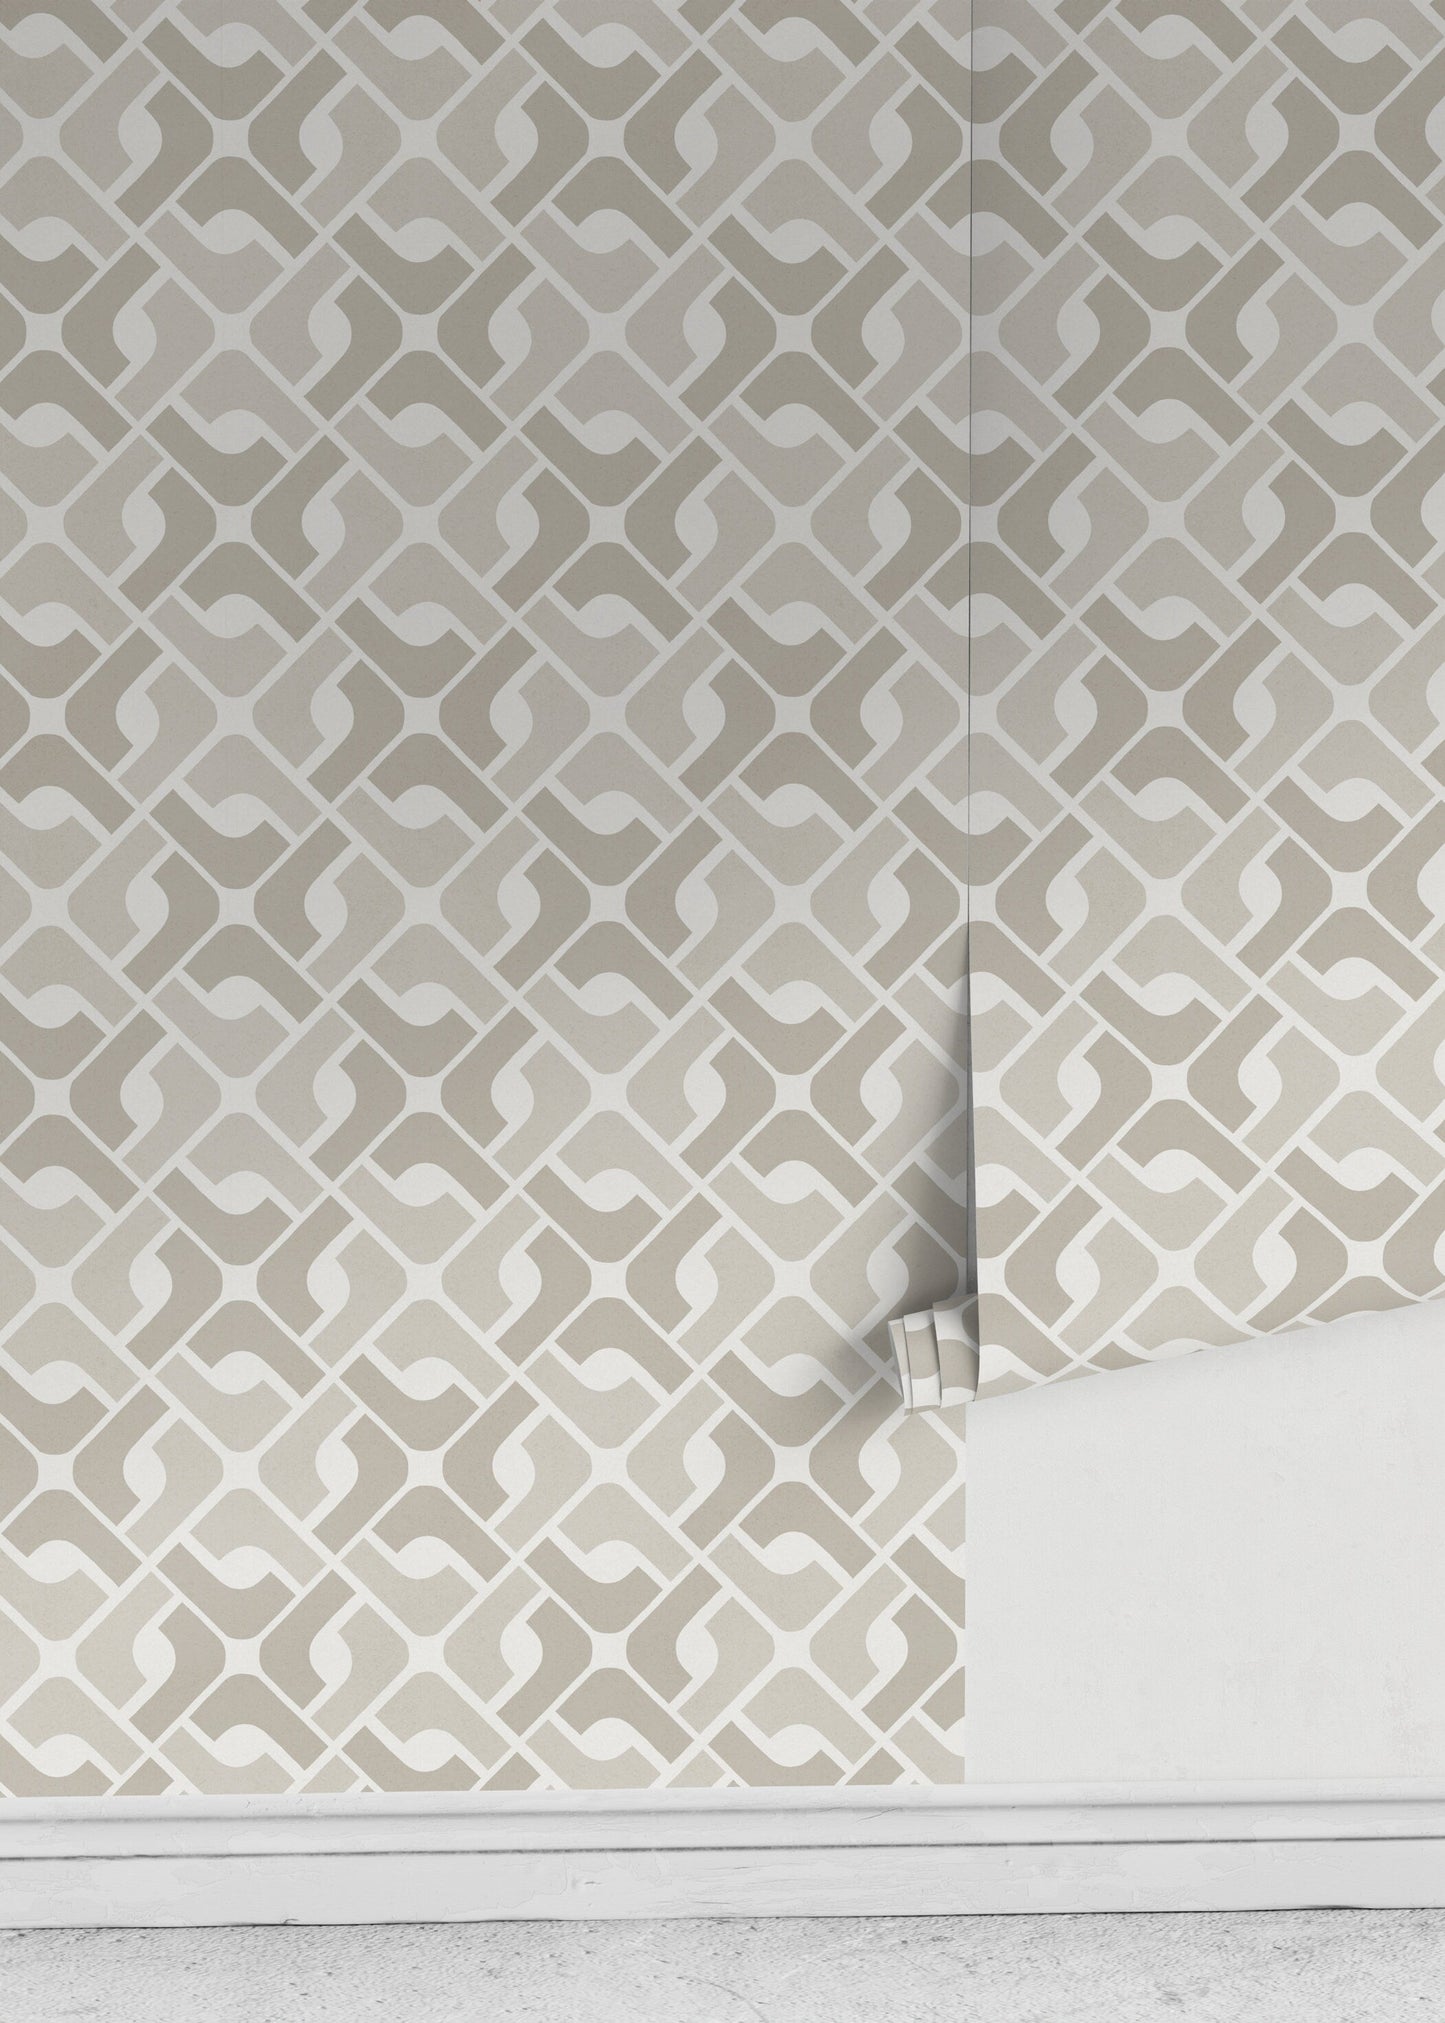 Neutral Geometric Tile Wallpaper / Peel and Stick Wallpaper Removable Wallpaper Home Decor Wall Art Wall Decor Room Decor - D328